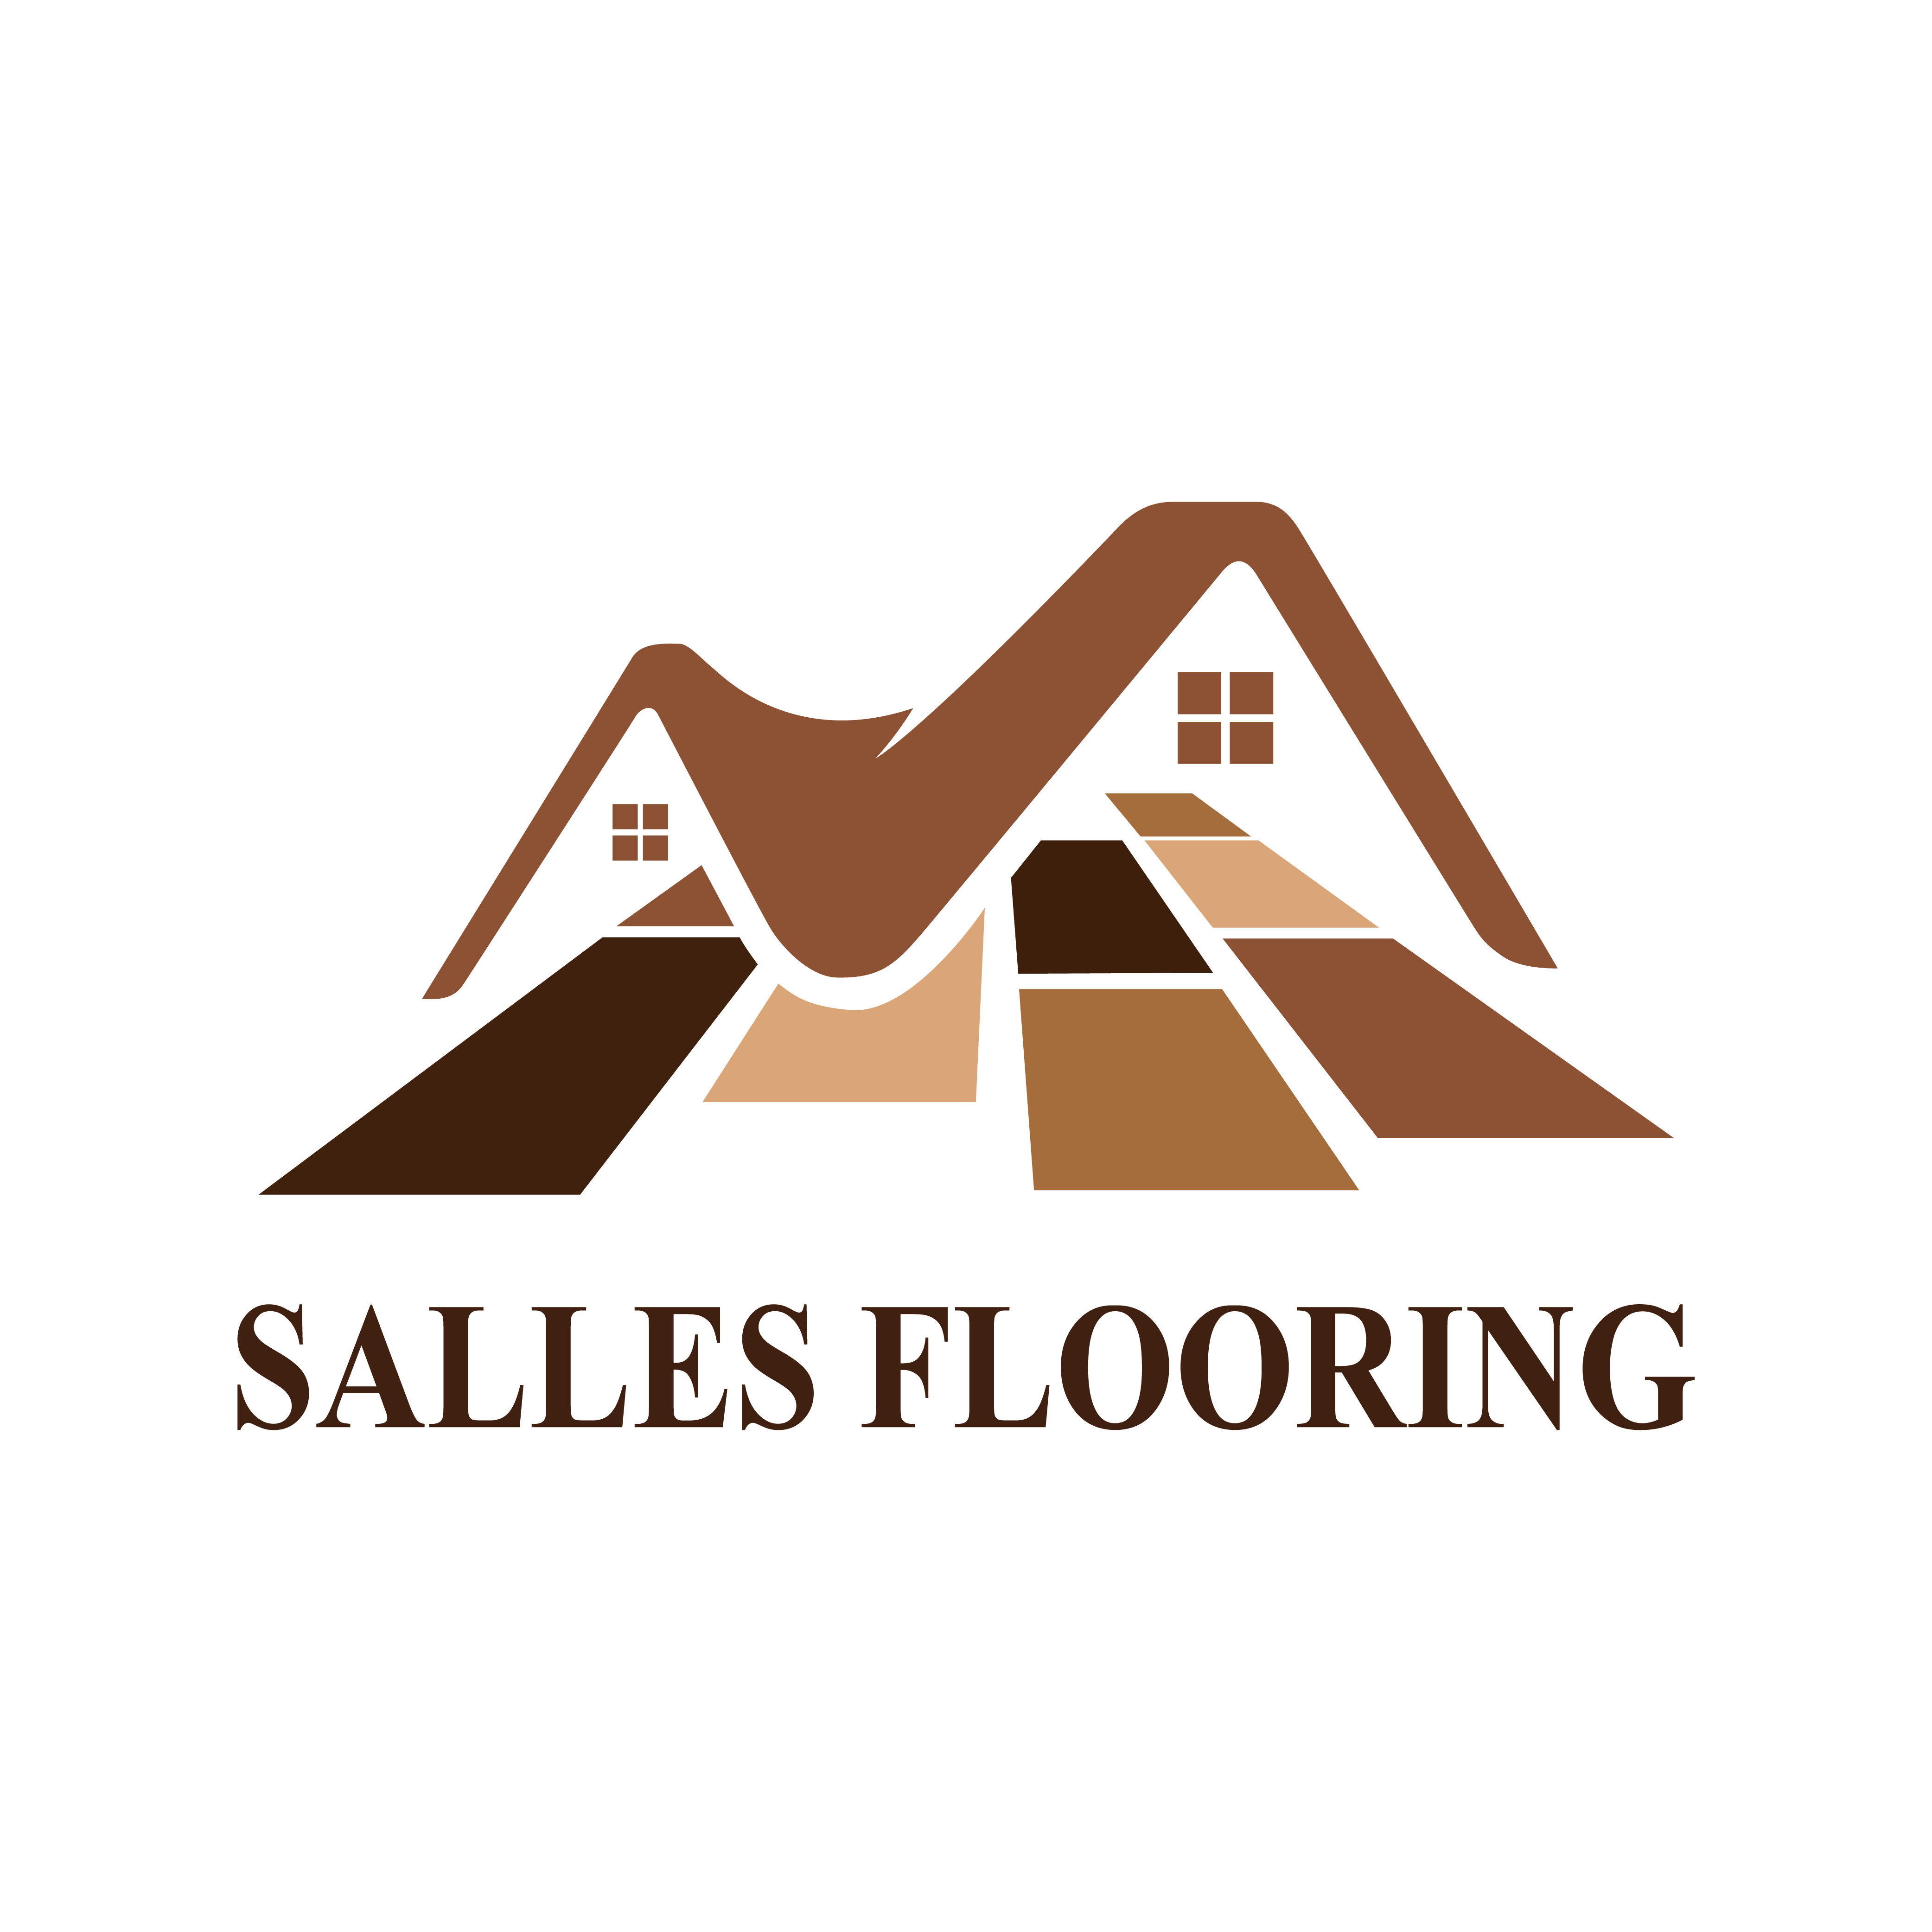 Sales Flooring Logo